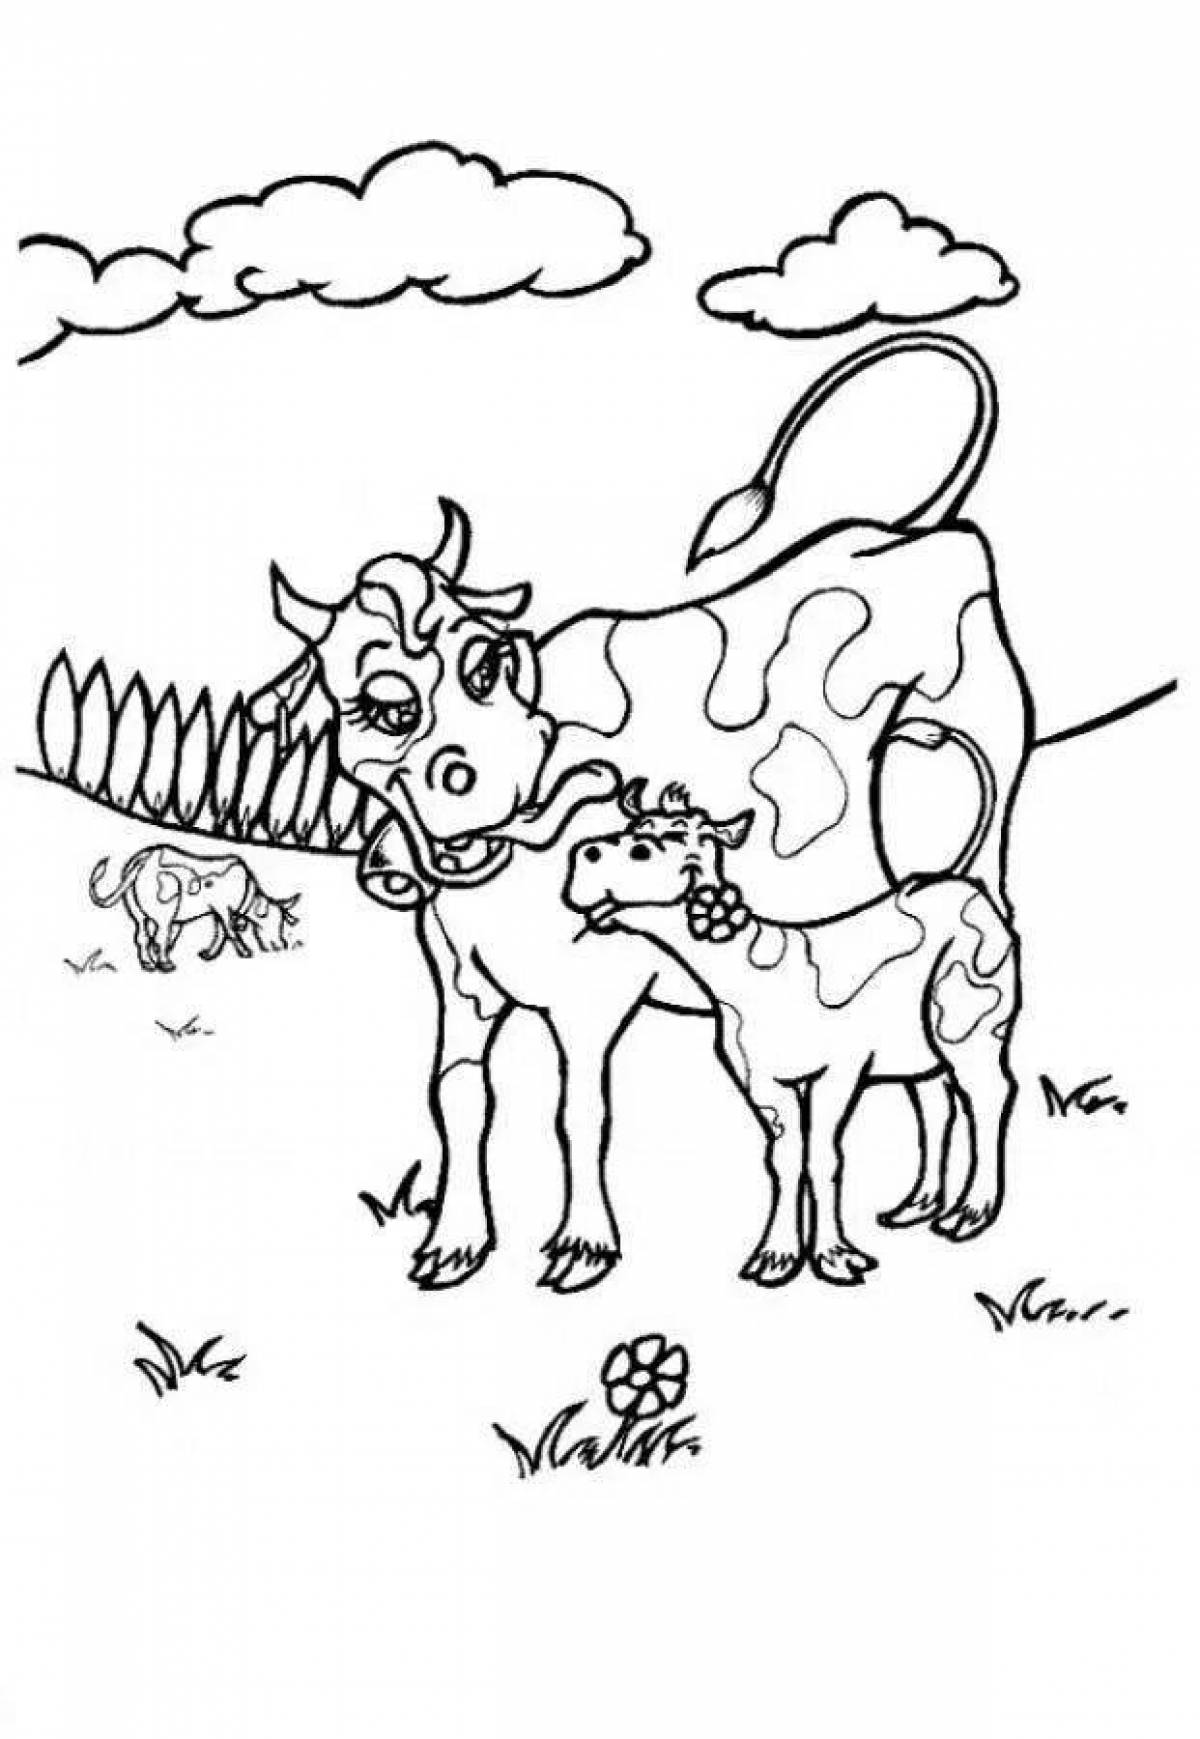 Забавная раскраска коровы и теленка